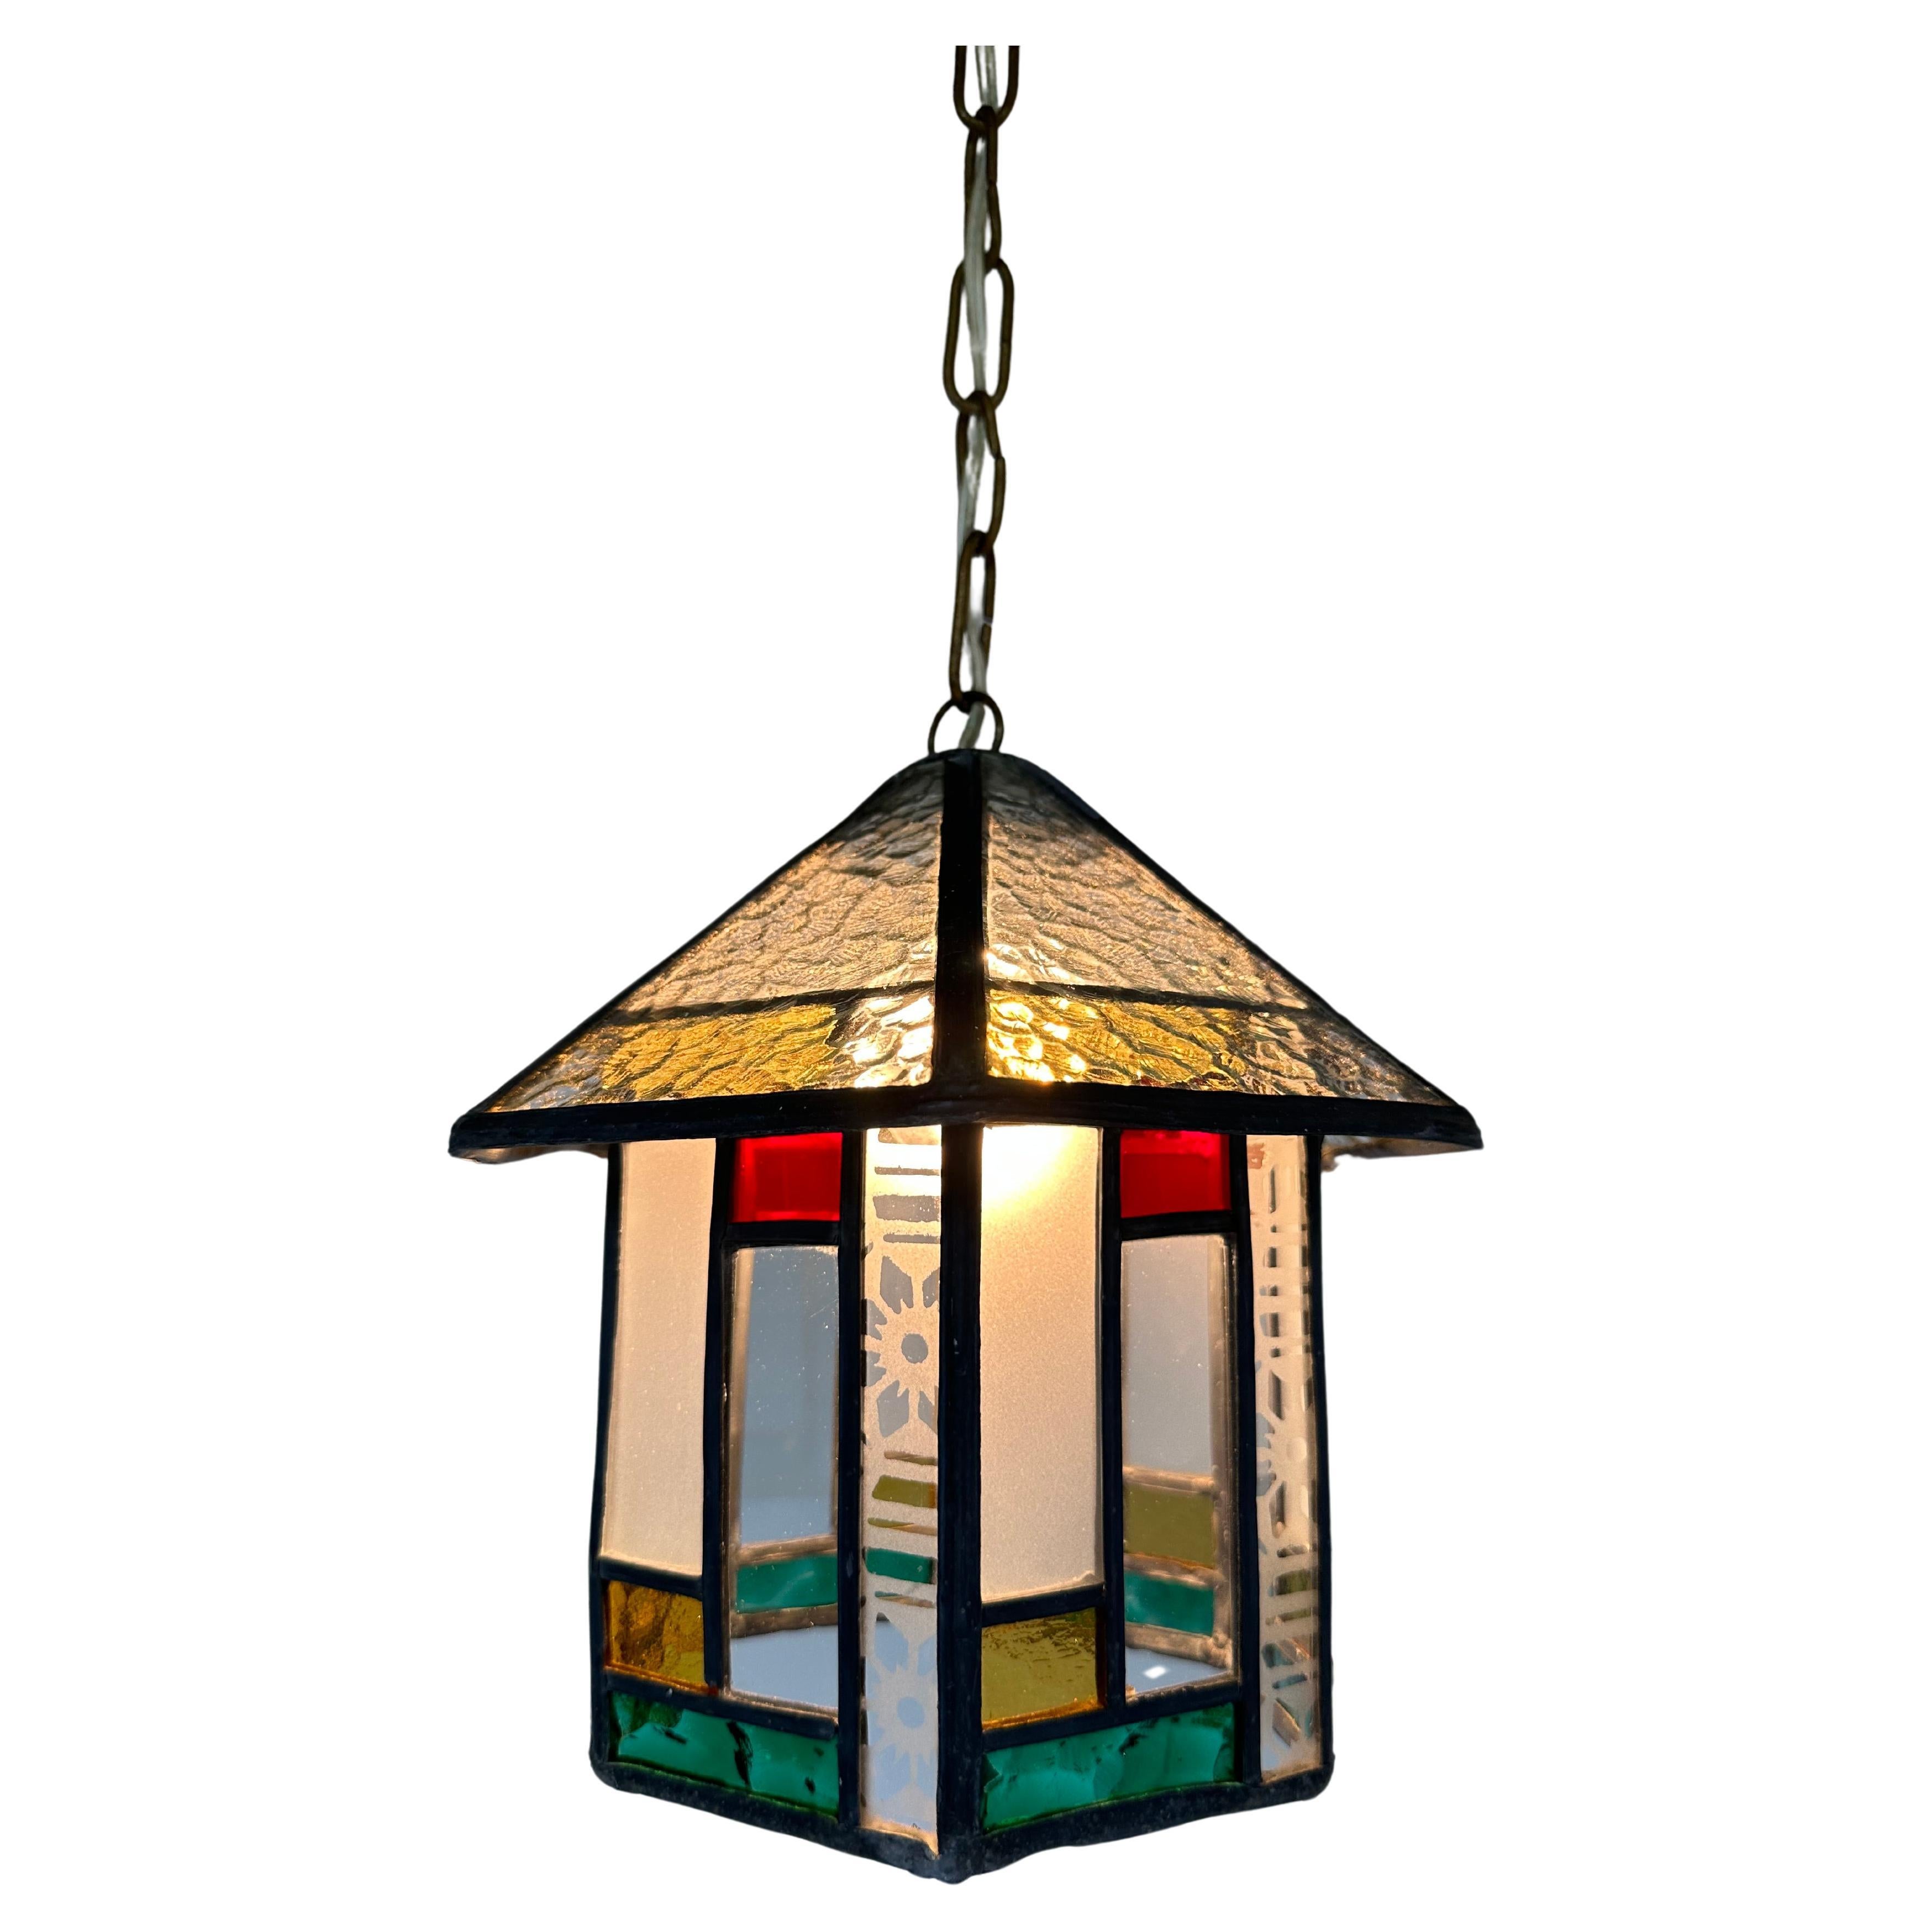 Dutch art deco hexagonal hallway lantern pendant light stained glass 1920 